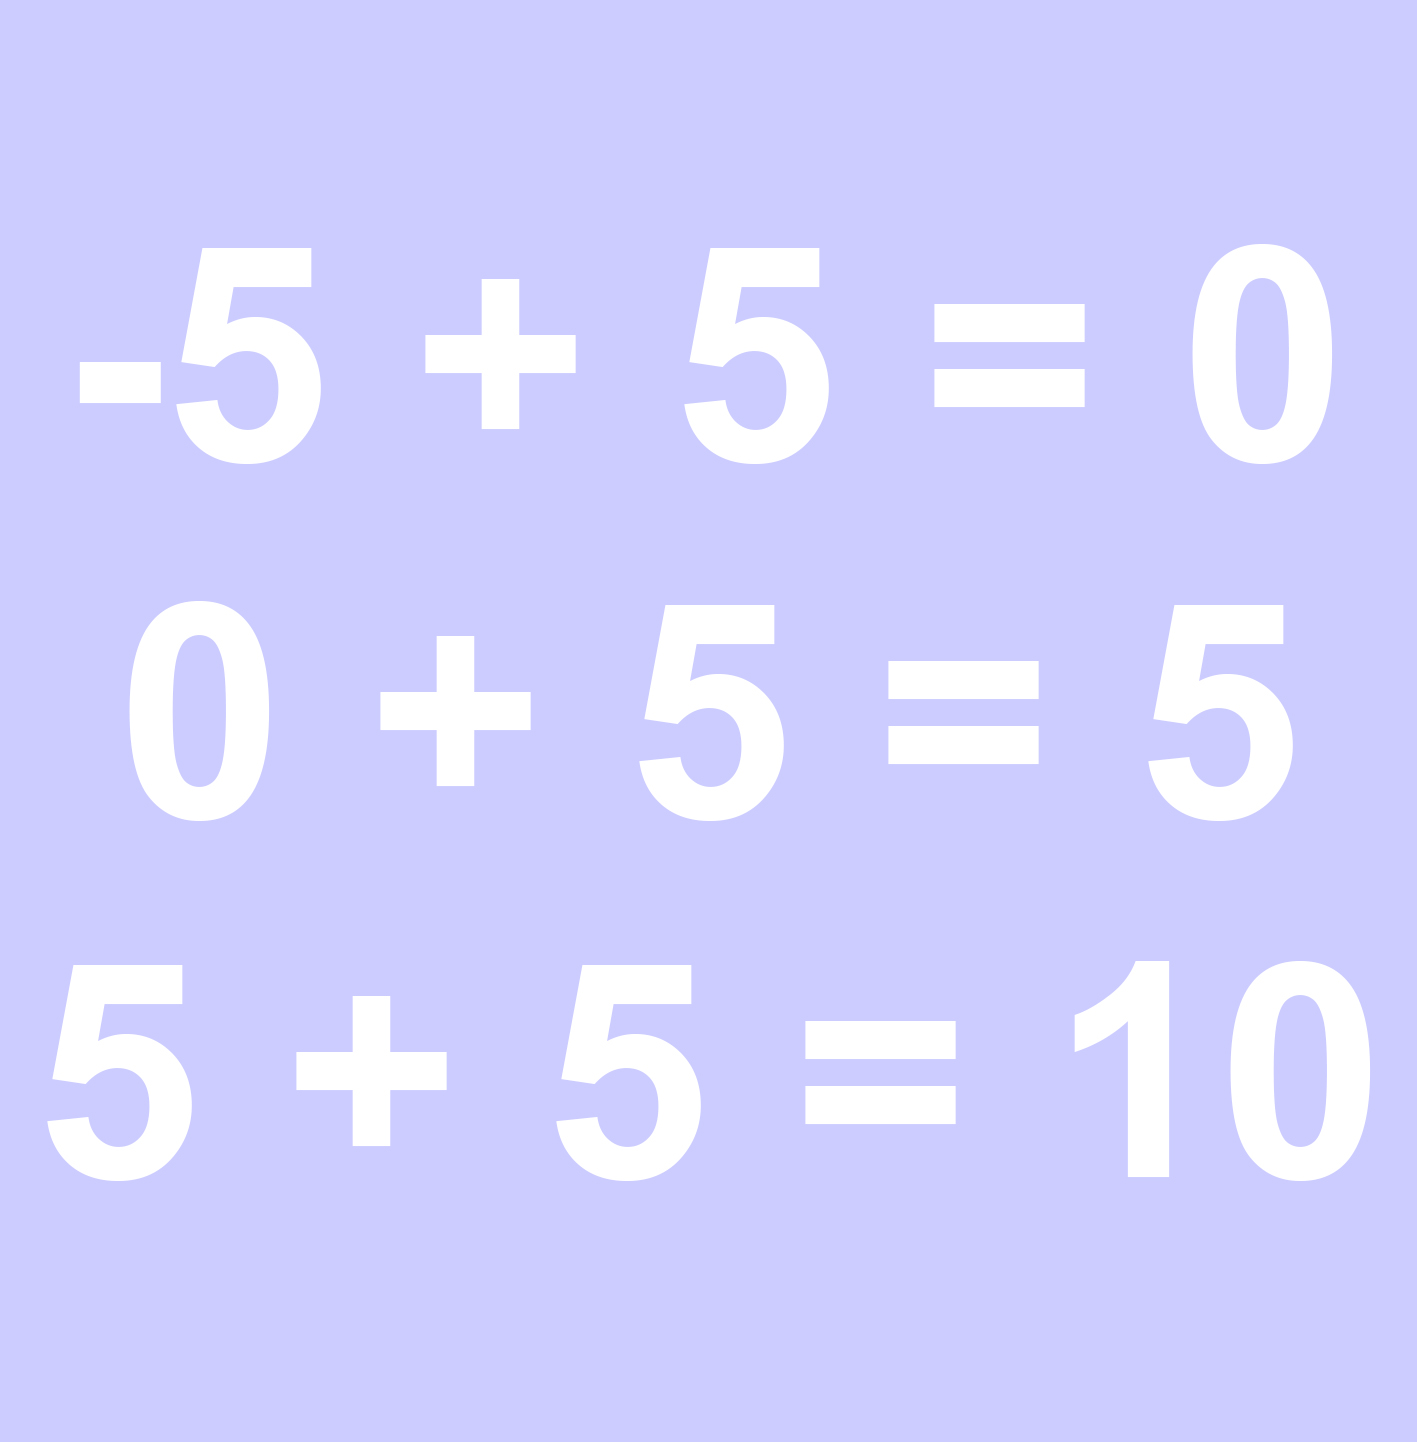 three math equations: -5+5=0, 0+5=5, 5+5+10